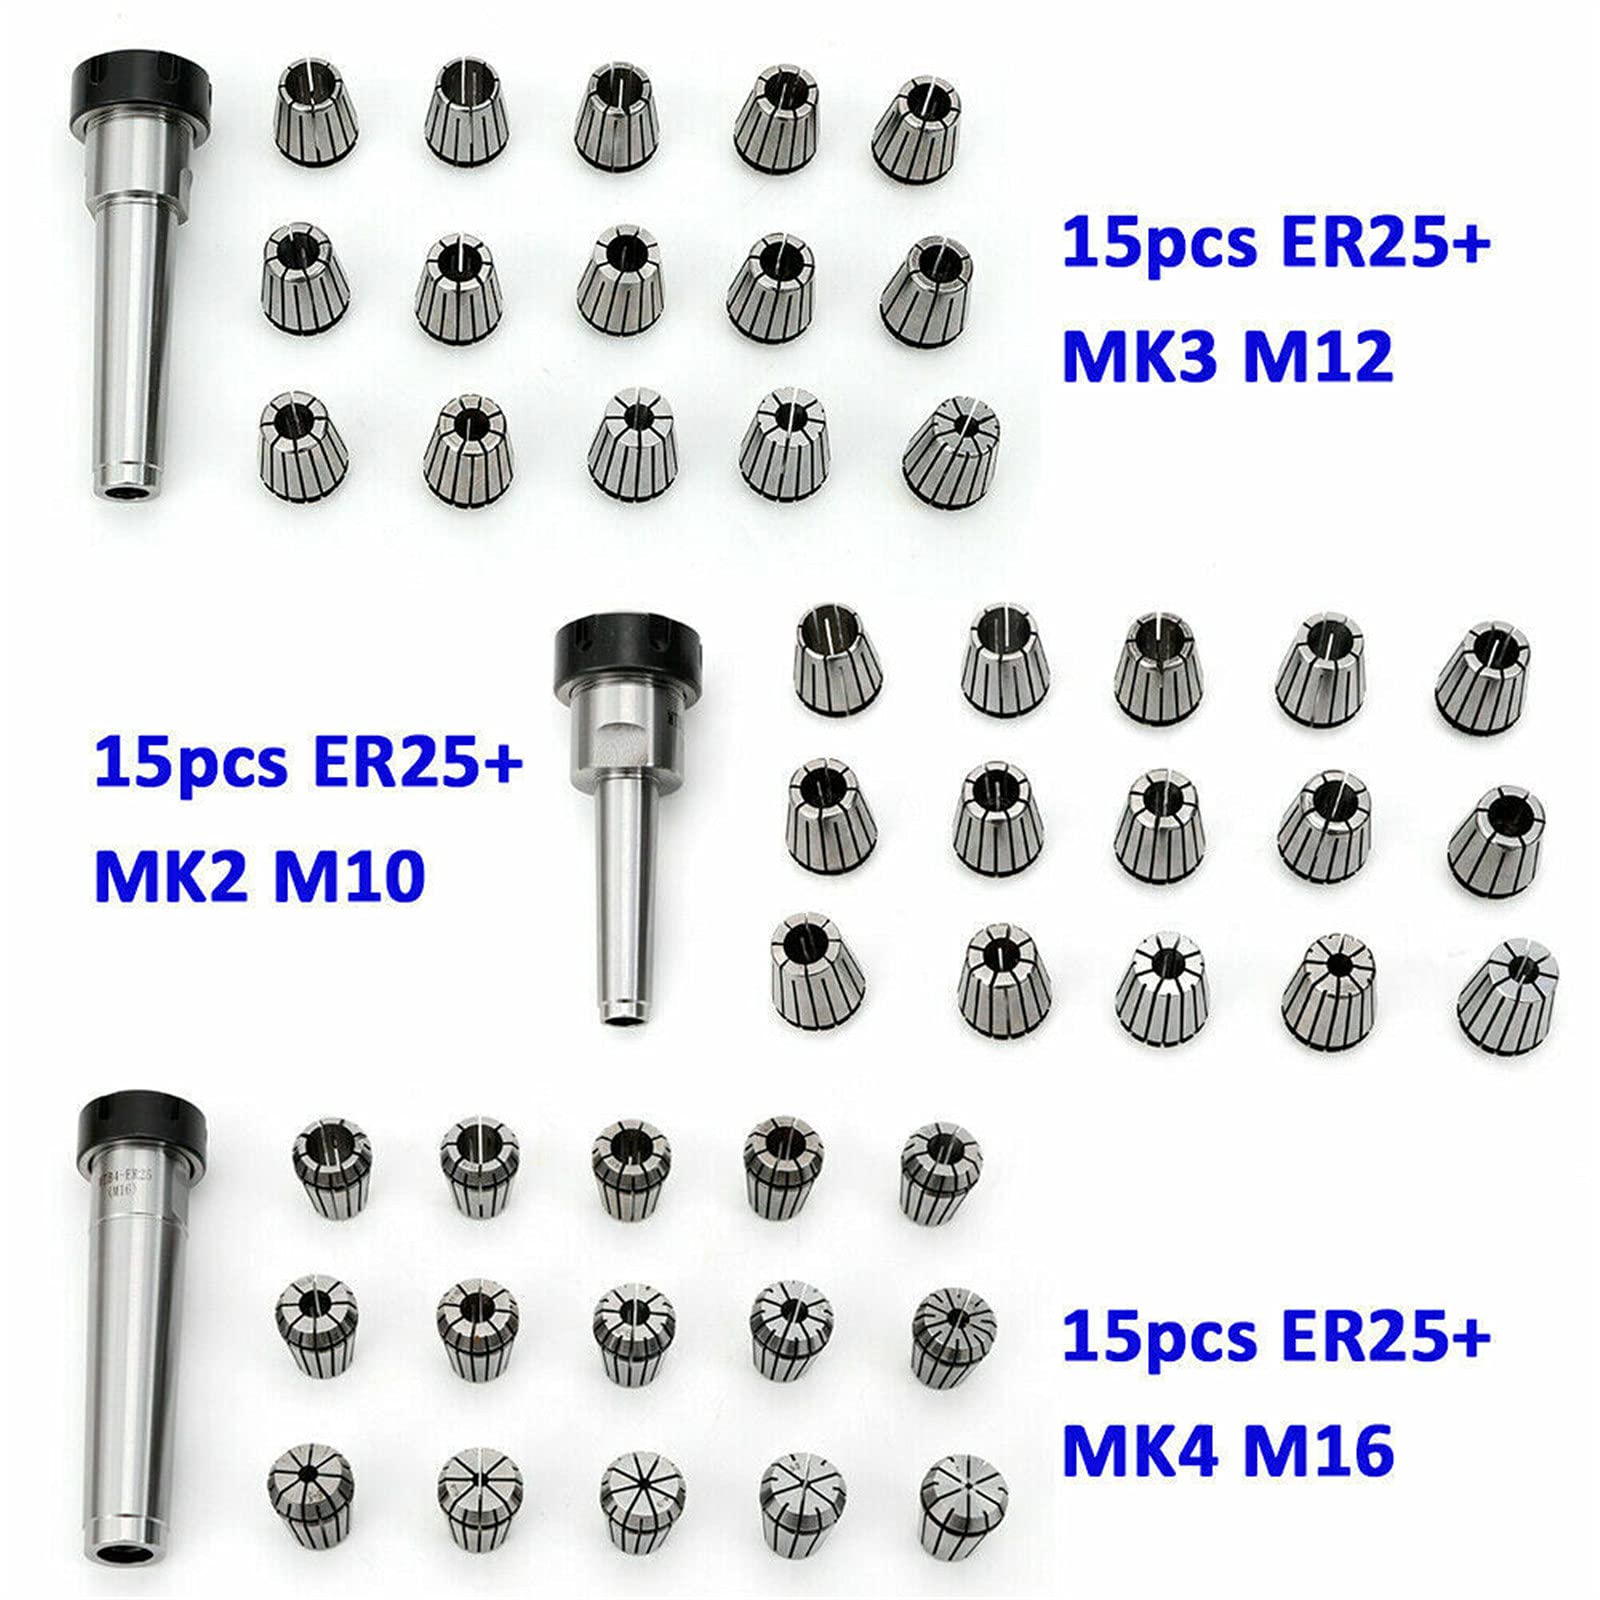 Mandrino portapinza MK3 M12 Kit pinza ER25 precision 0,015 mm